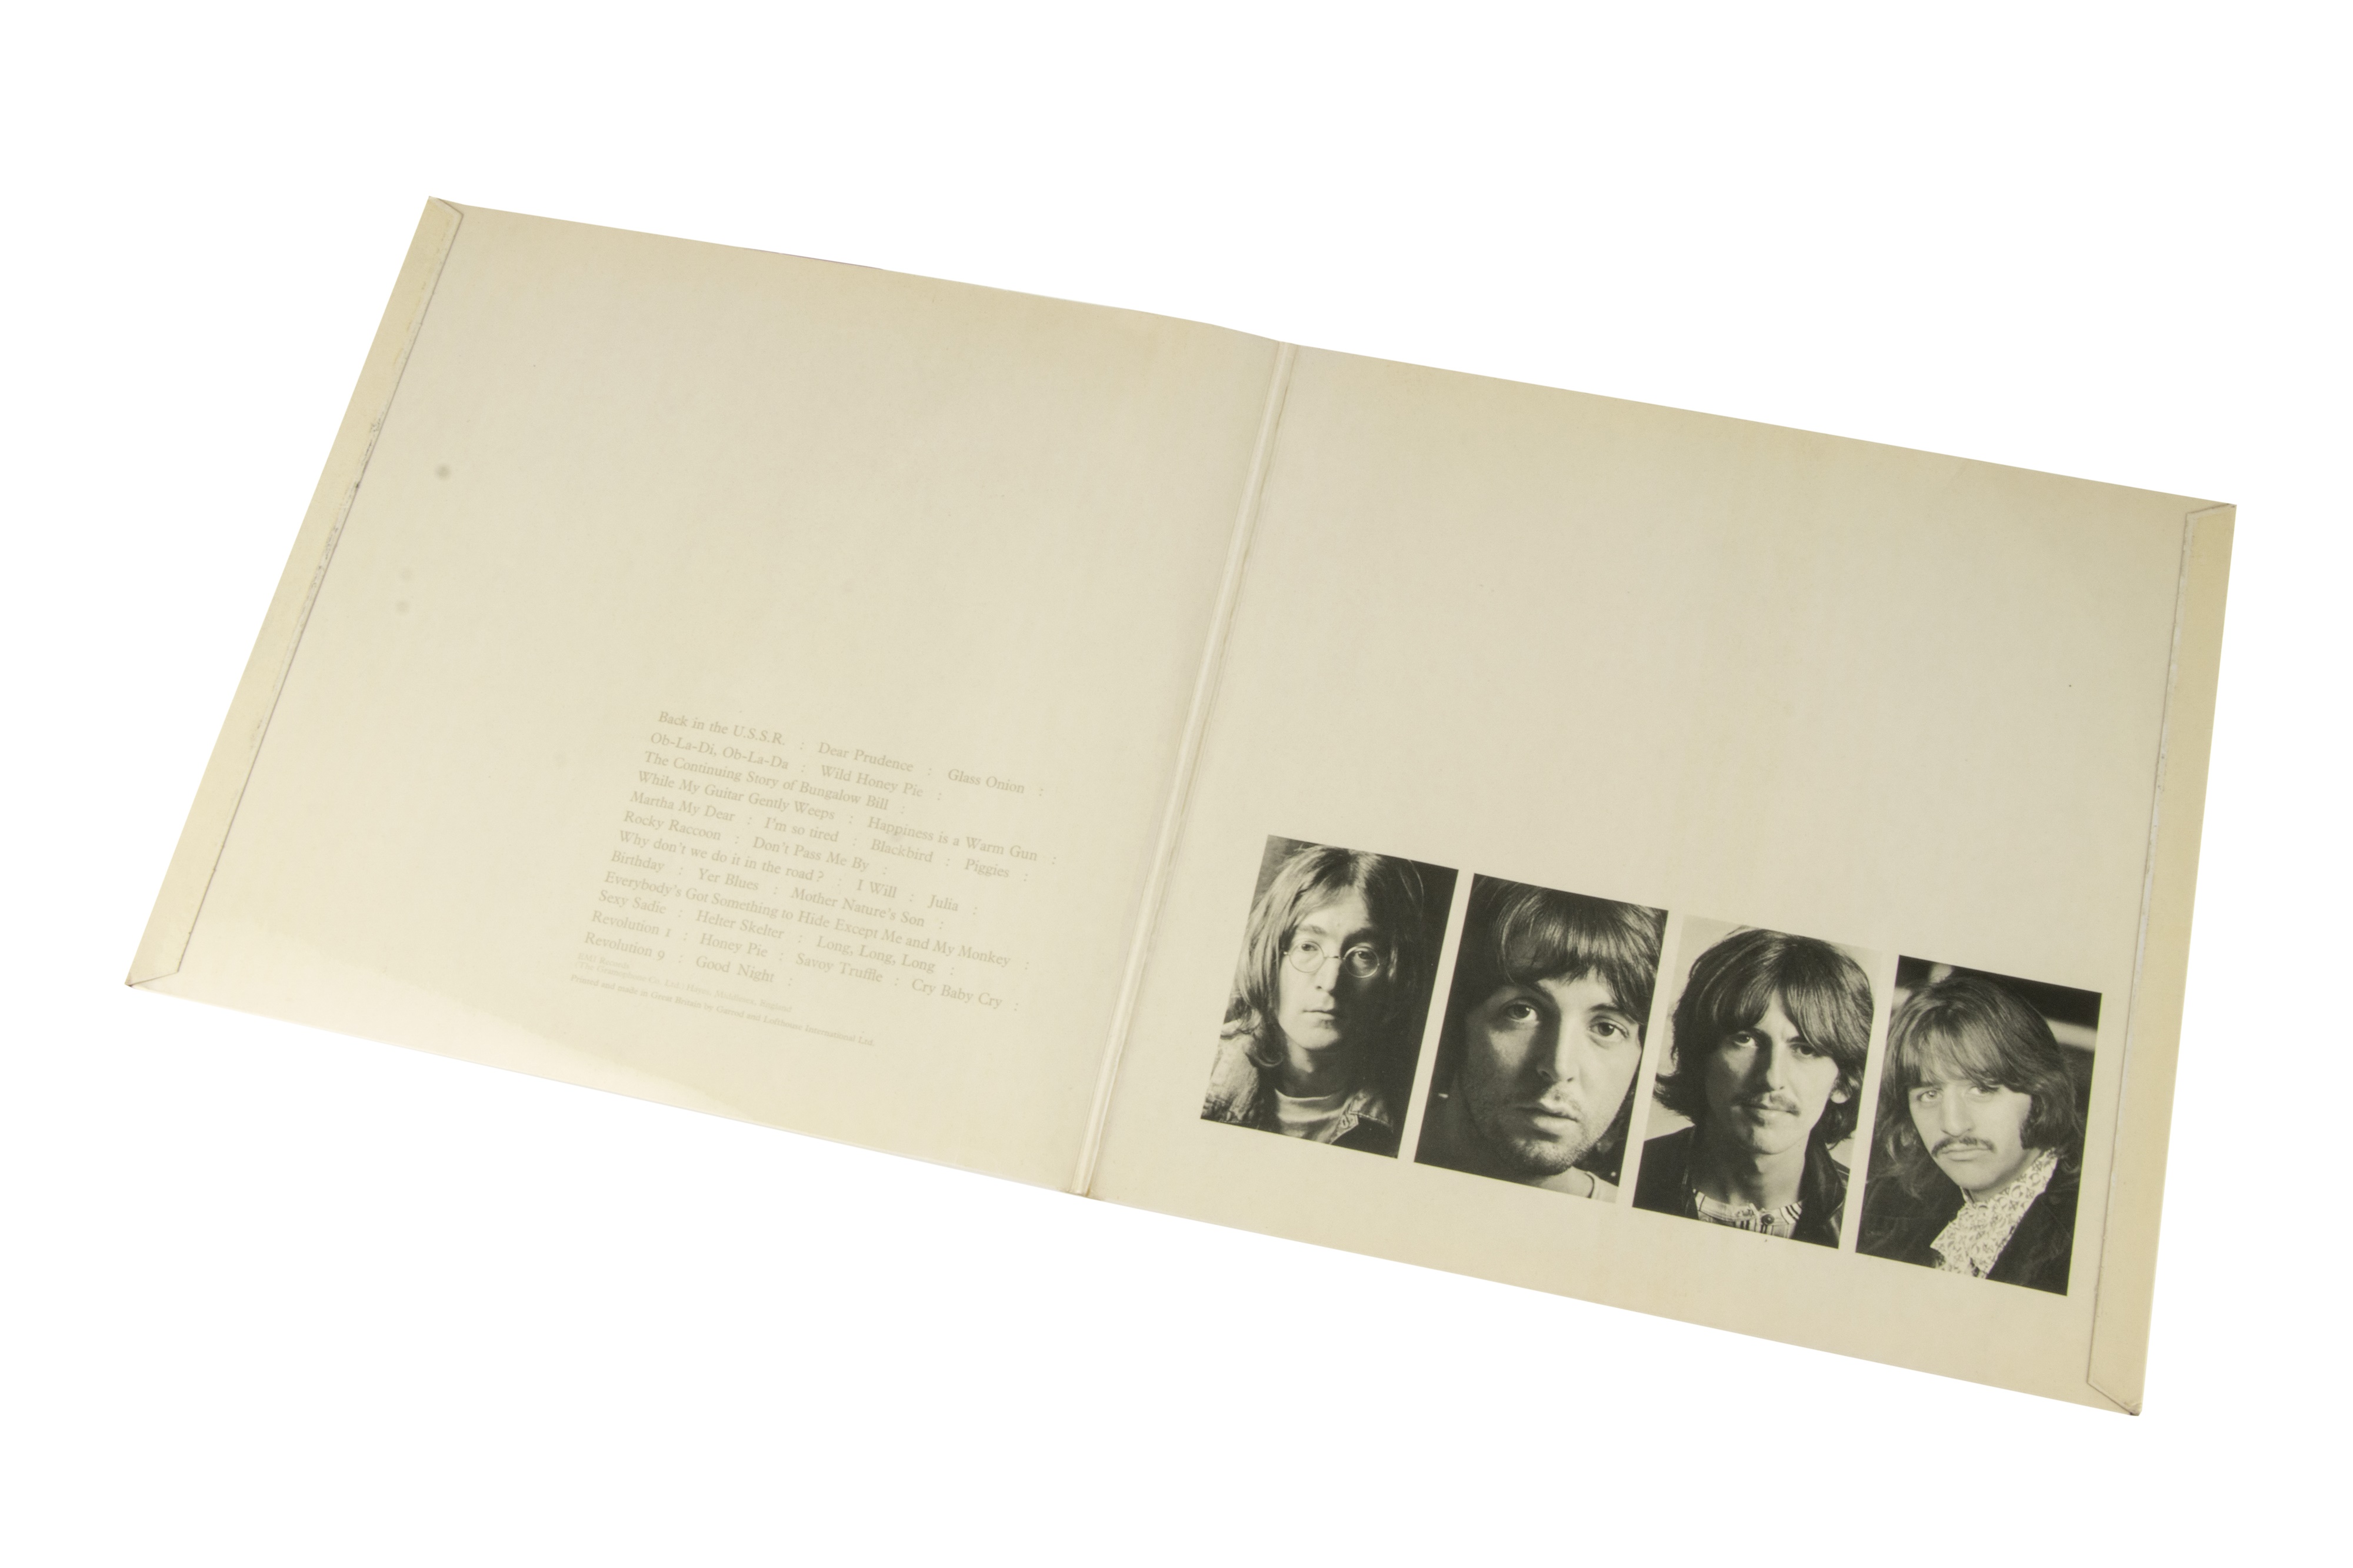 The Beatles - The Beatles (White Album), - Image 2 of 7